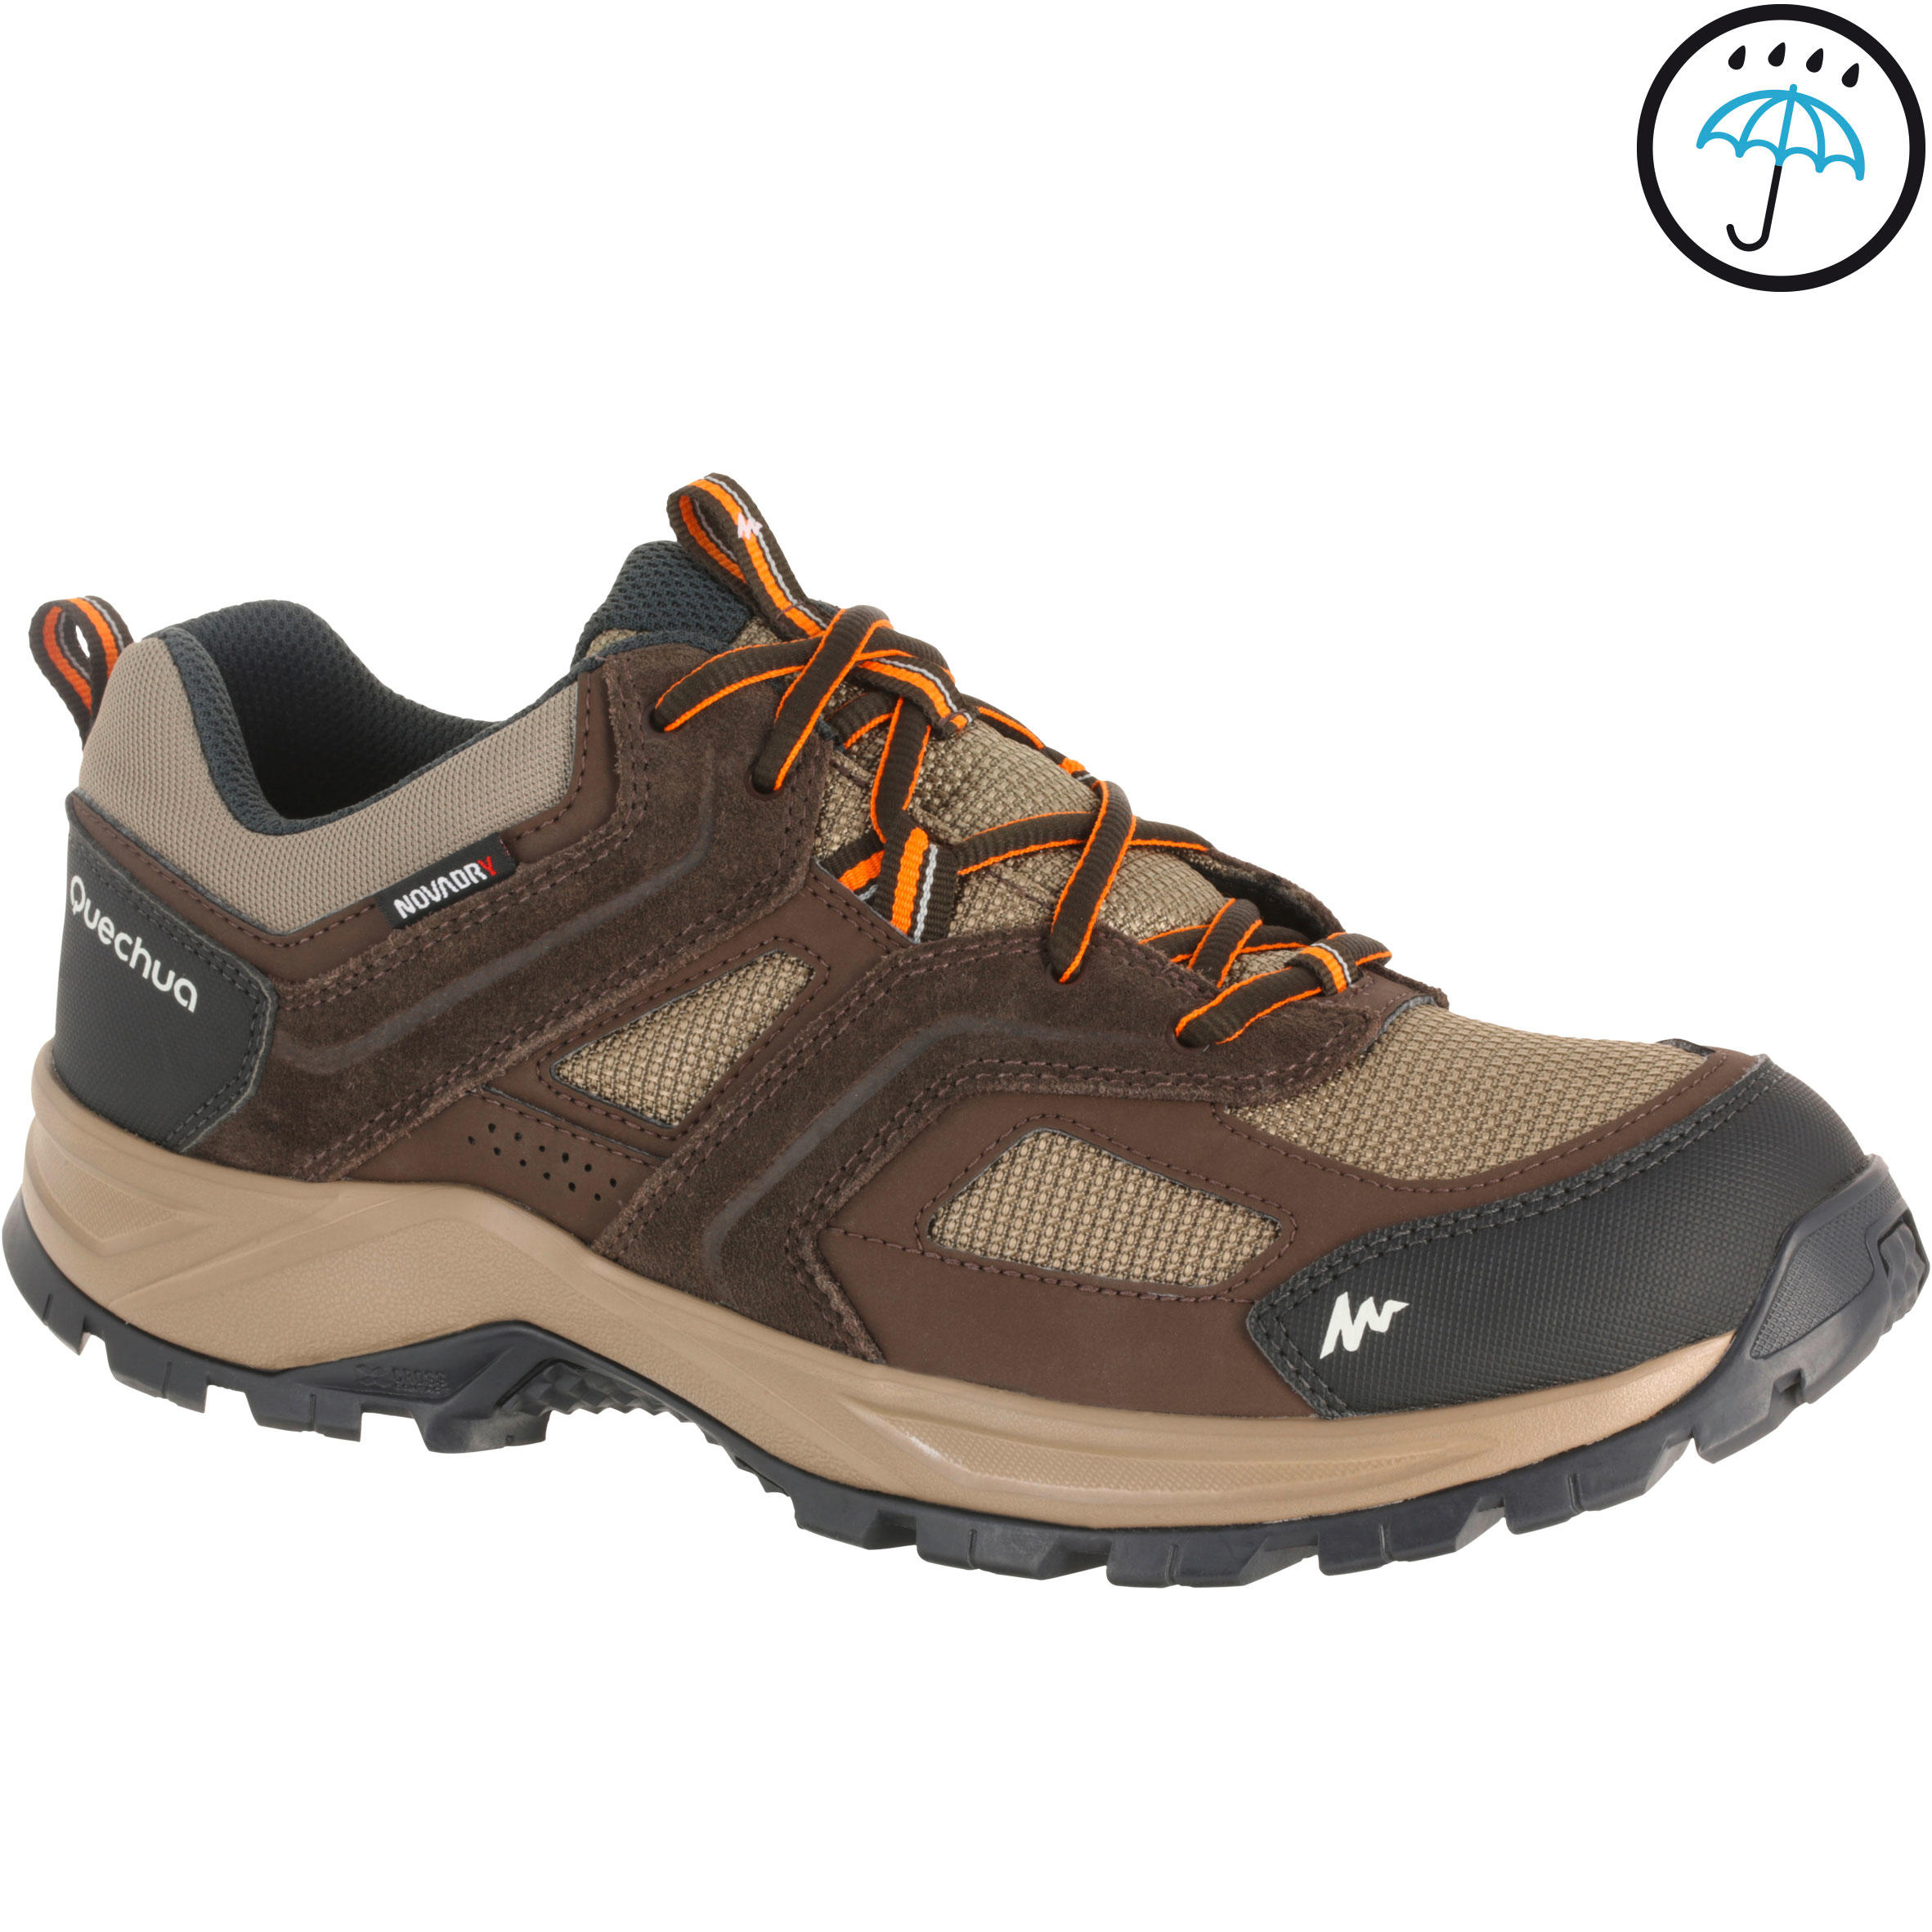 Forclaz 100 Male Waterproof Hiking Boot - Brown 1/13